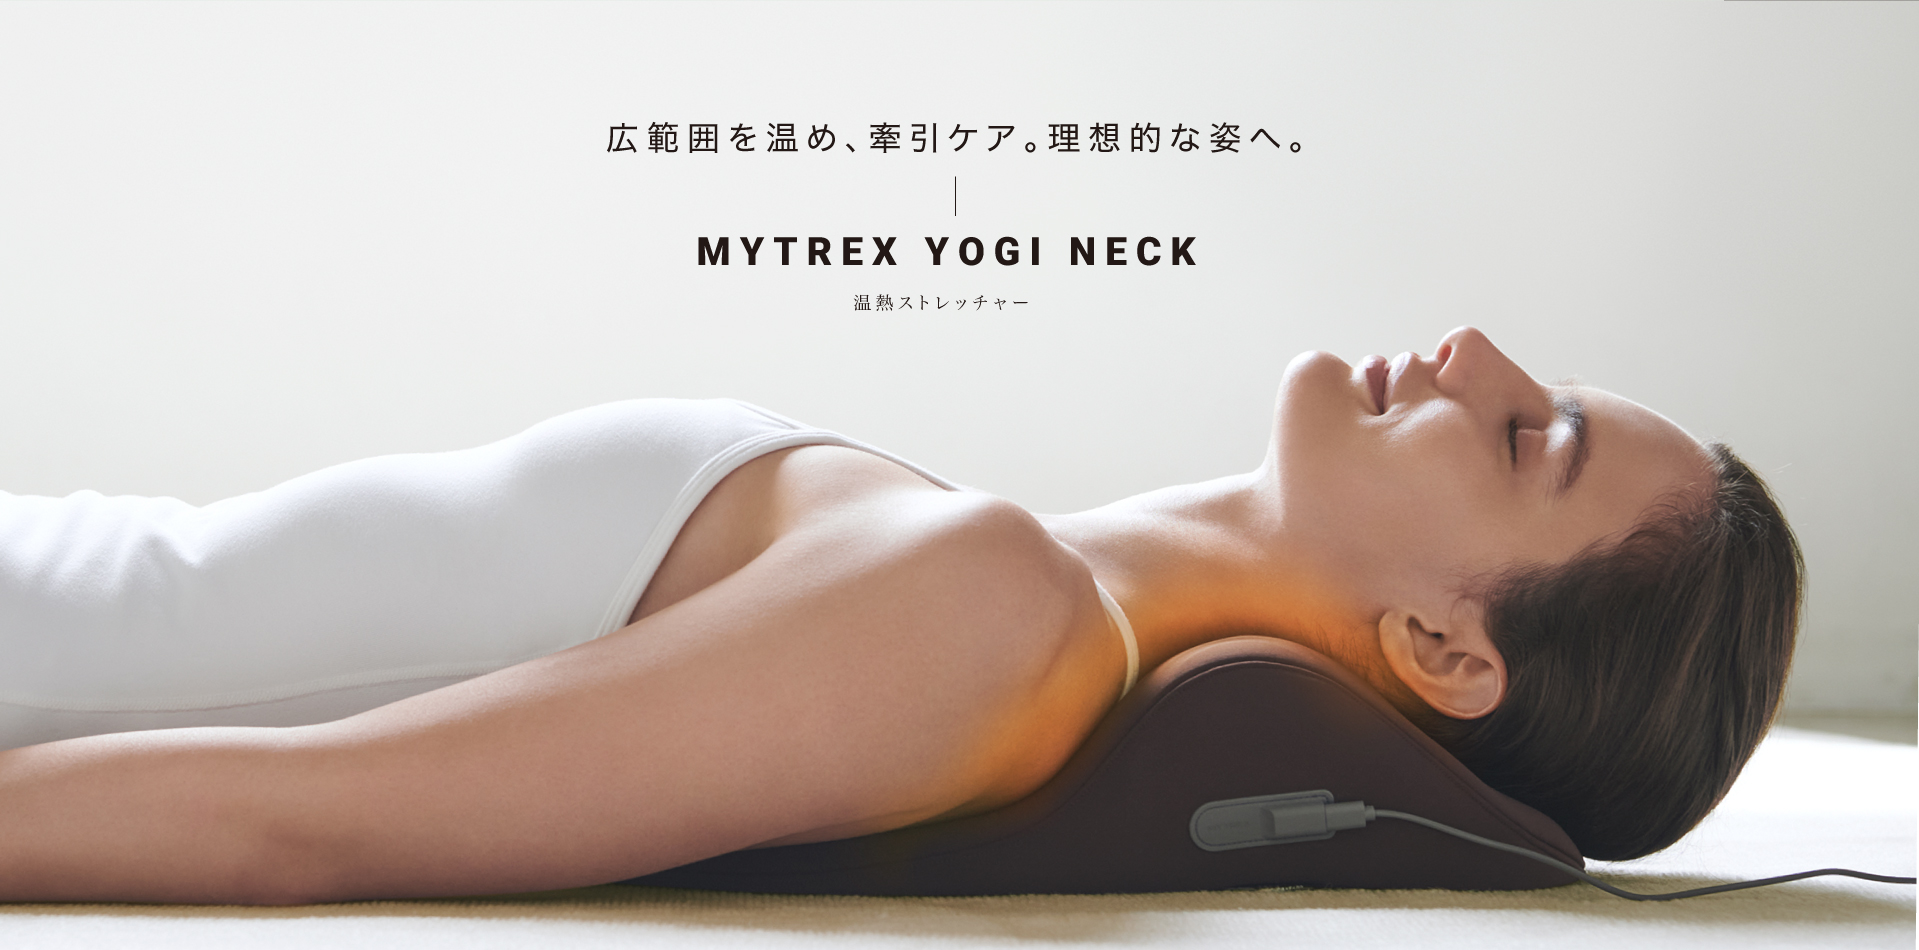 MYTREX YOGI NECK – 温熱ストレッチャー – マイトレックス ヨギネック 